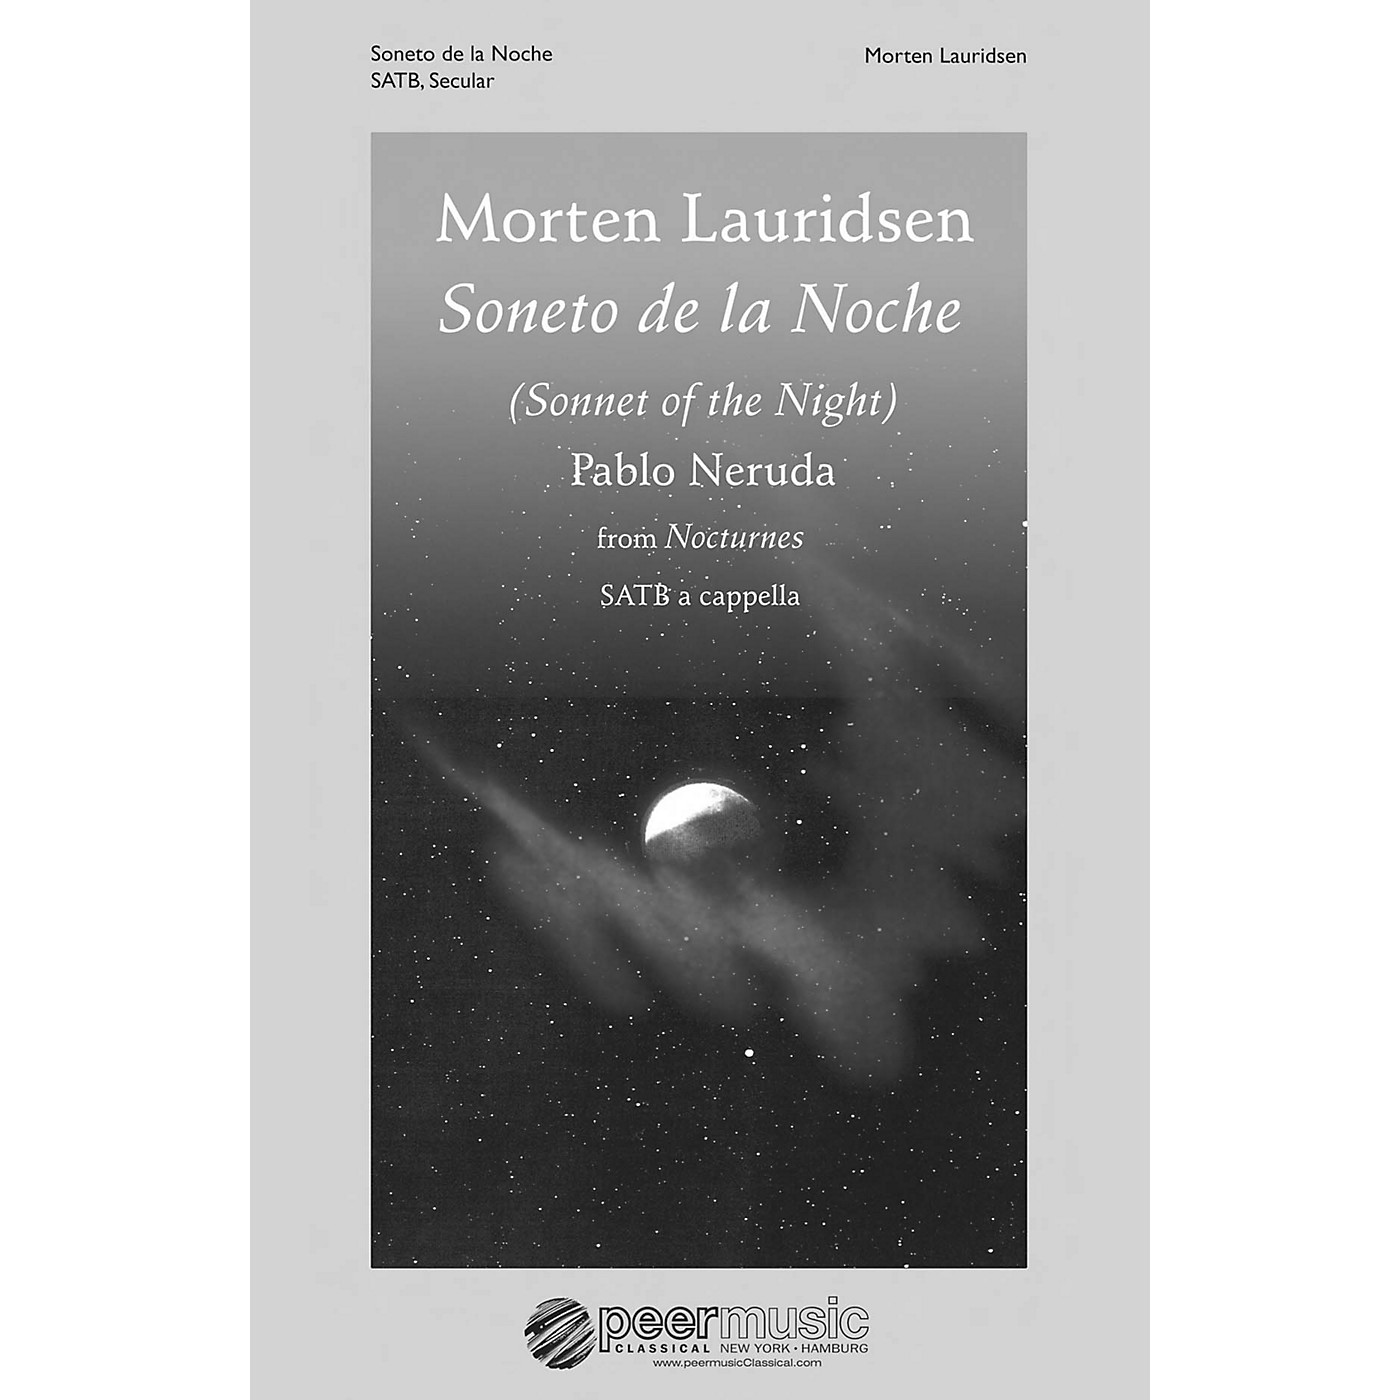 PEER MUSIC Soneto de la Noche (from Nocturnes) SATB a cappella Composed by Morten Lauridsen thumbnail